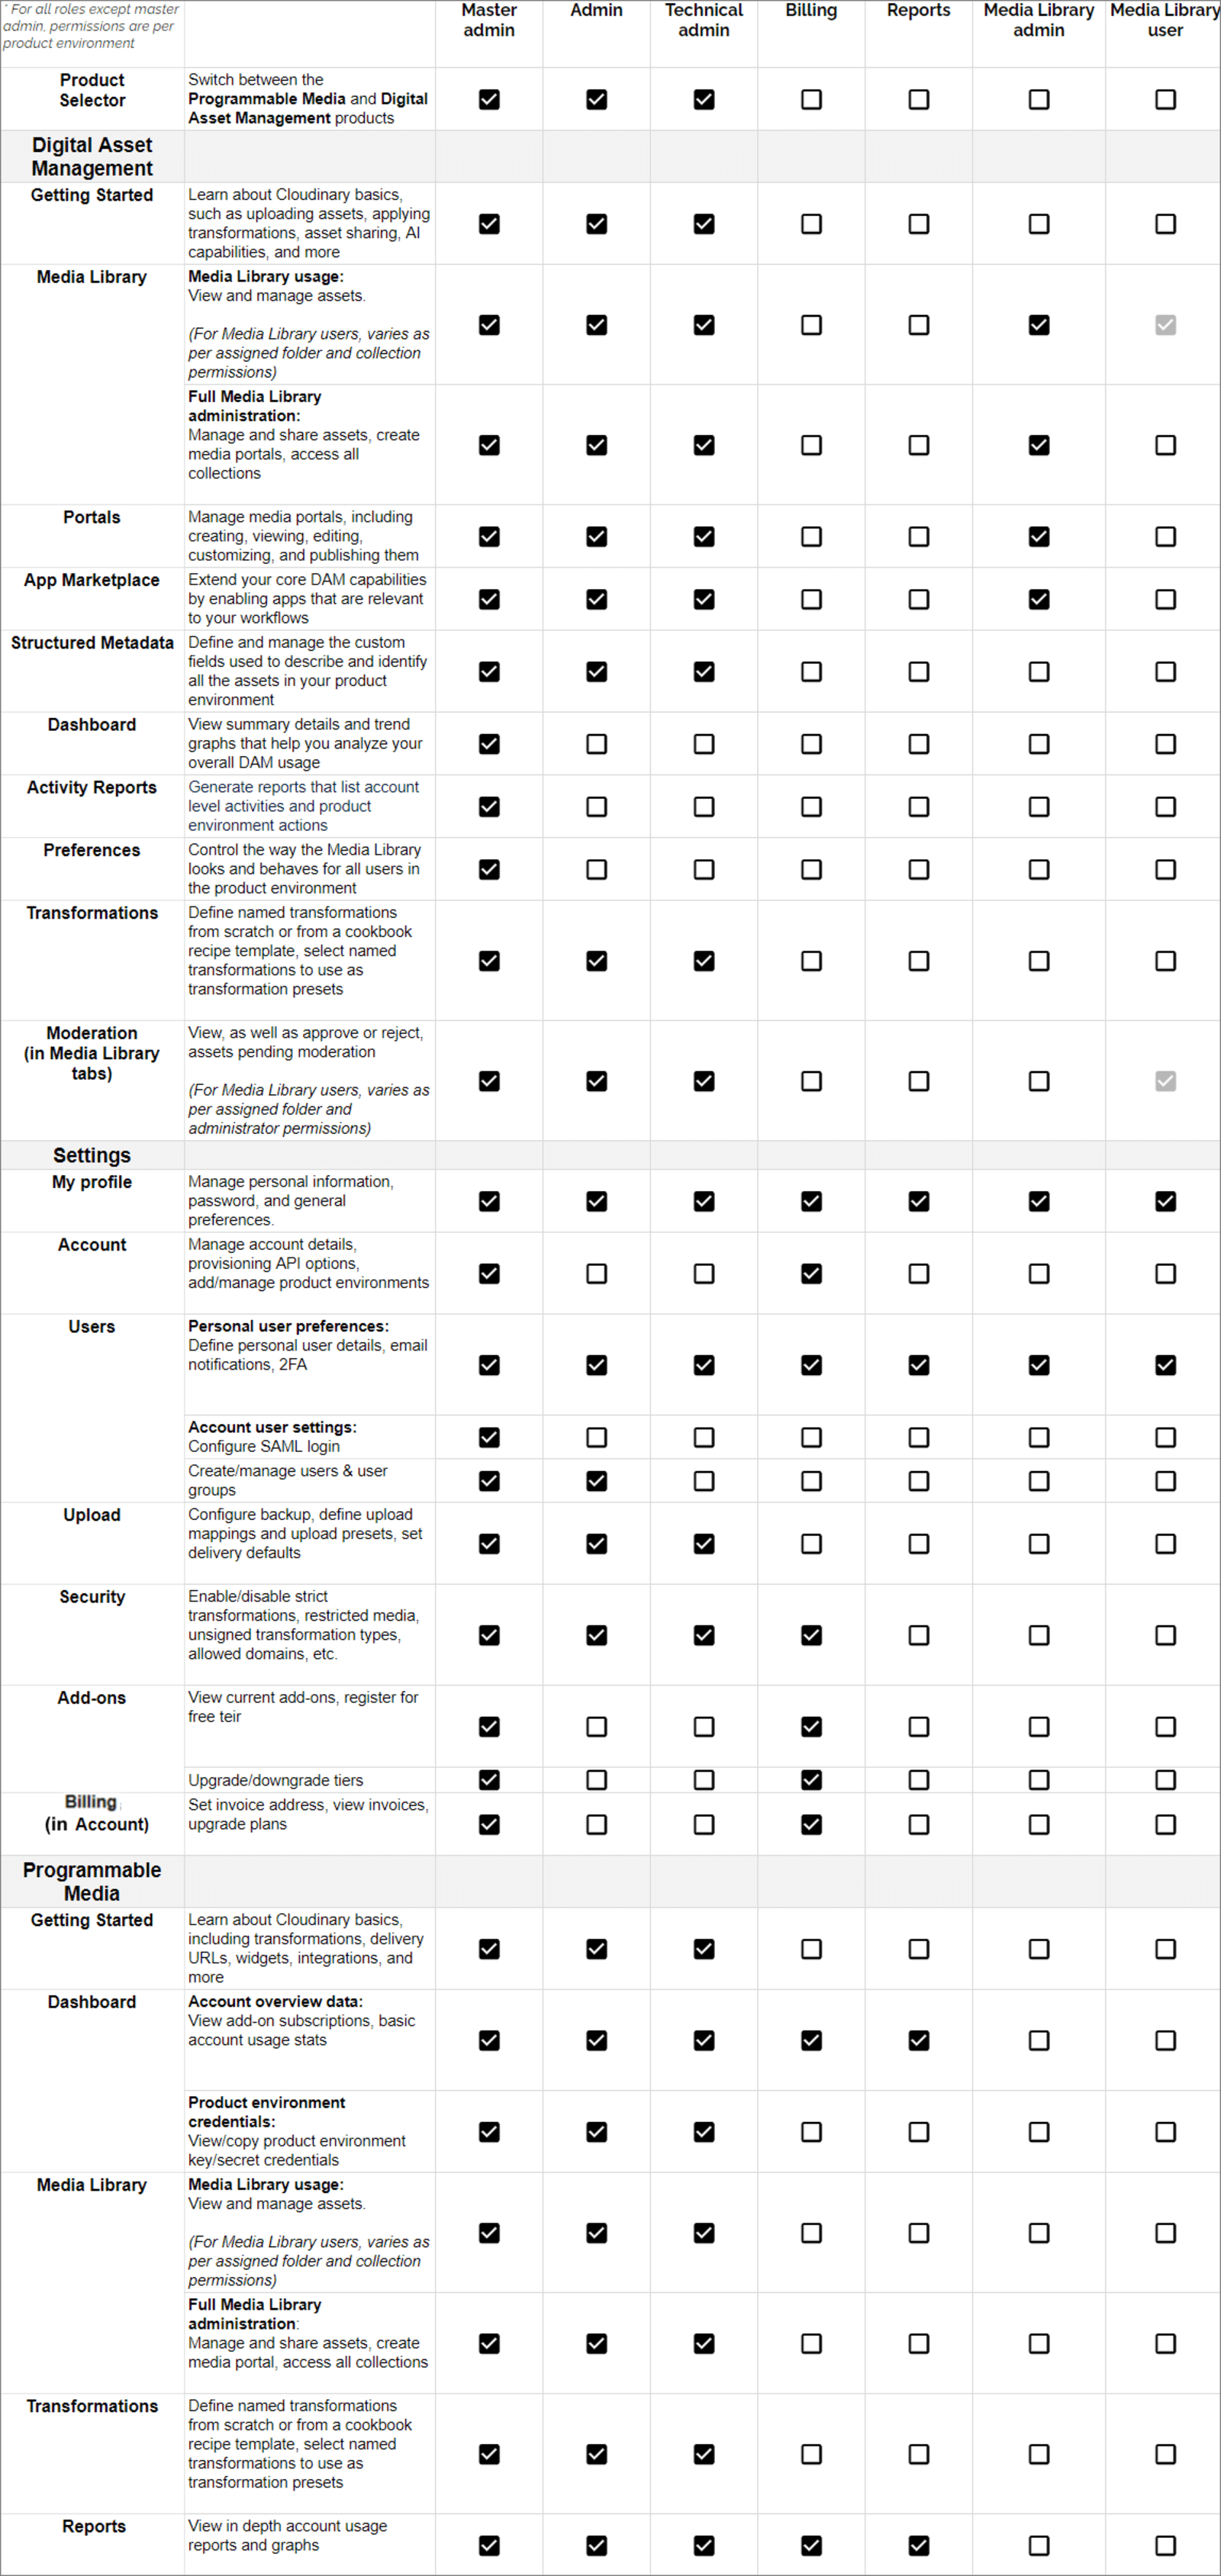 Table summarizing all role-based permissions